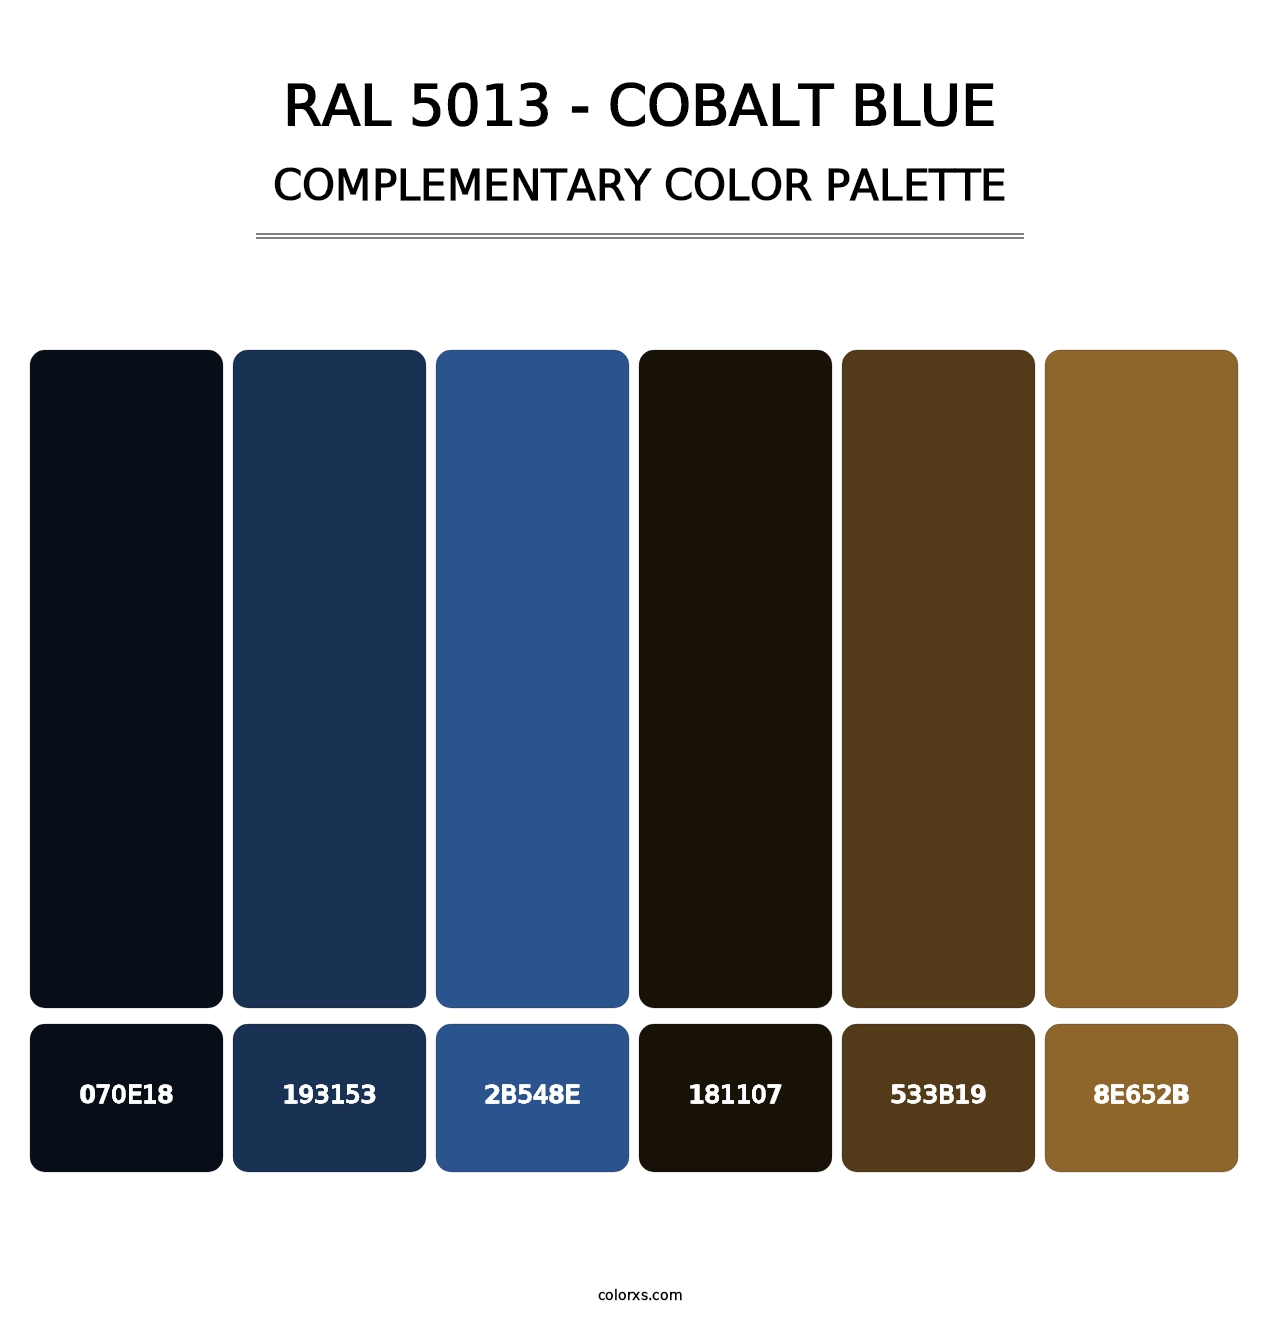 RAL 5013 - Cobalt Blue - Complementary Color Palette